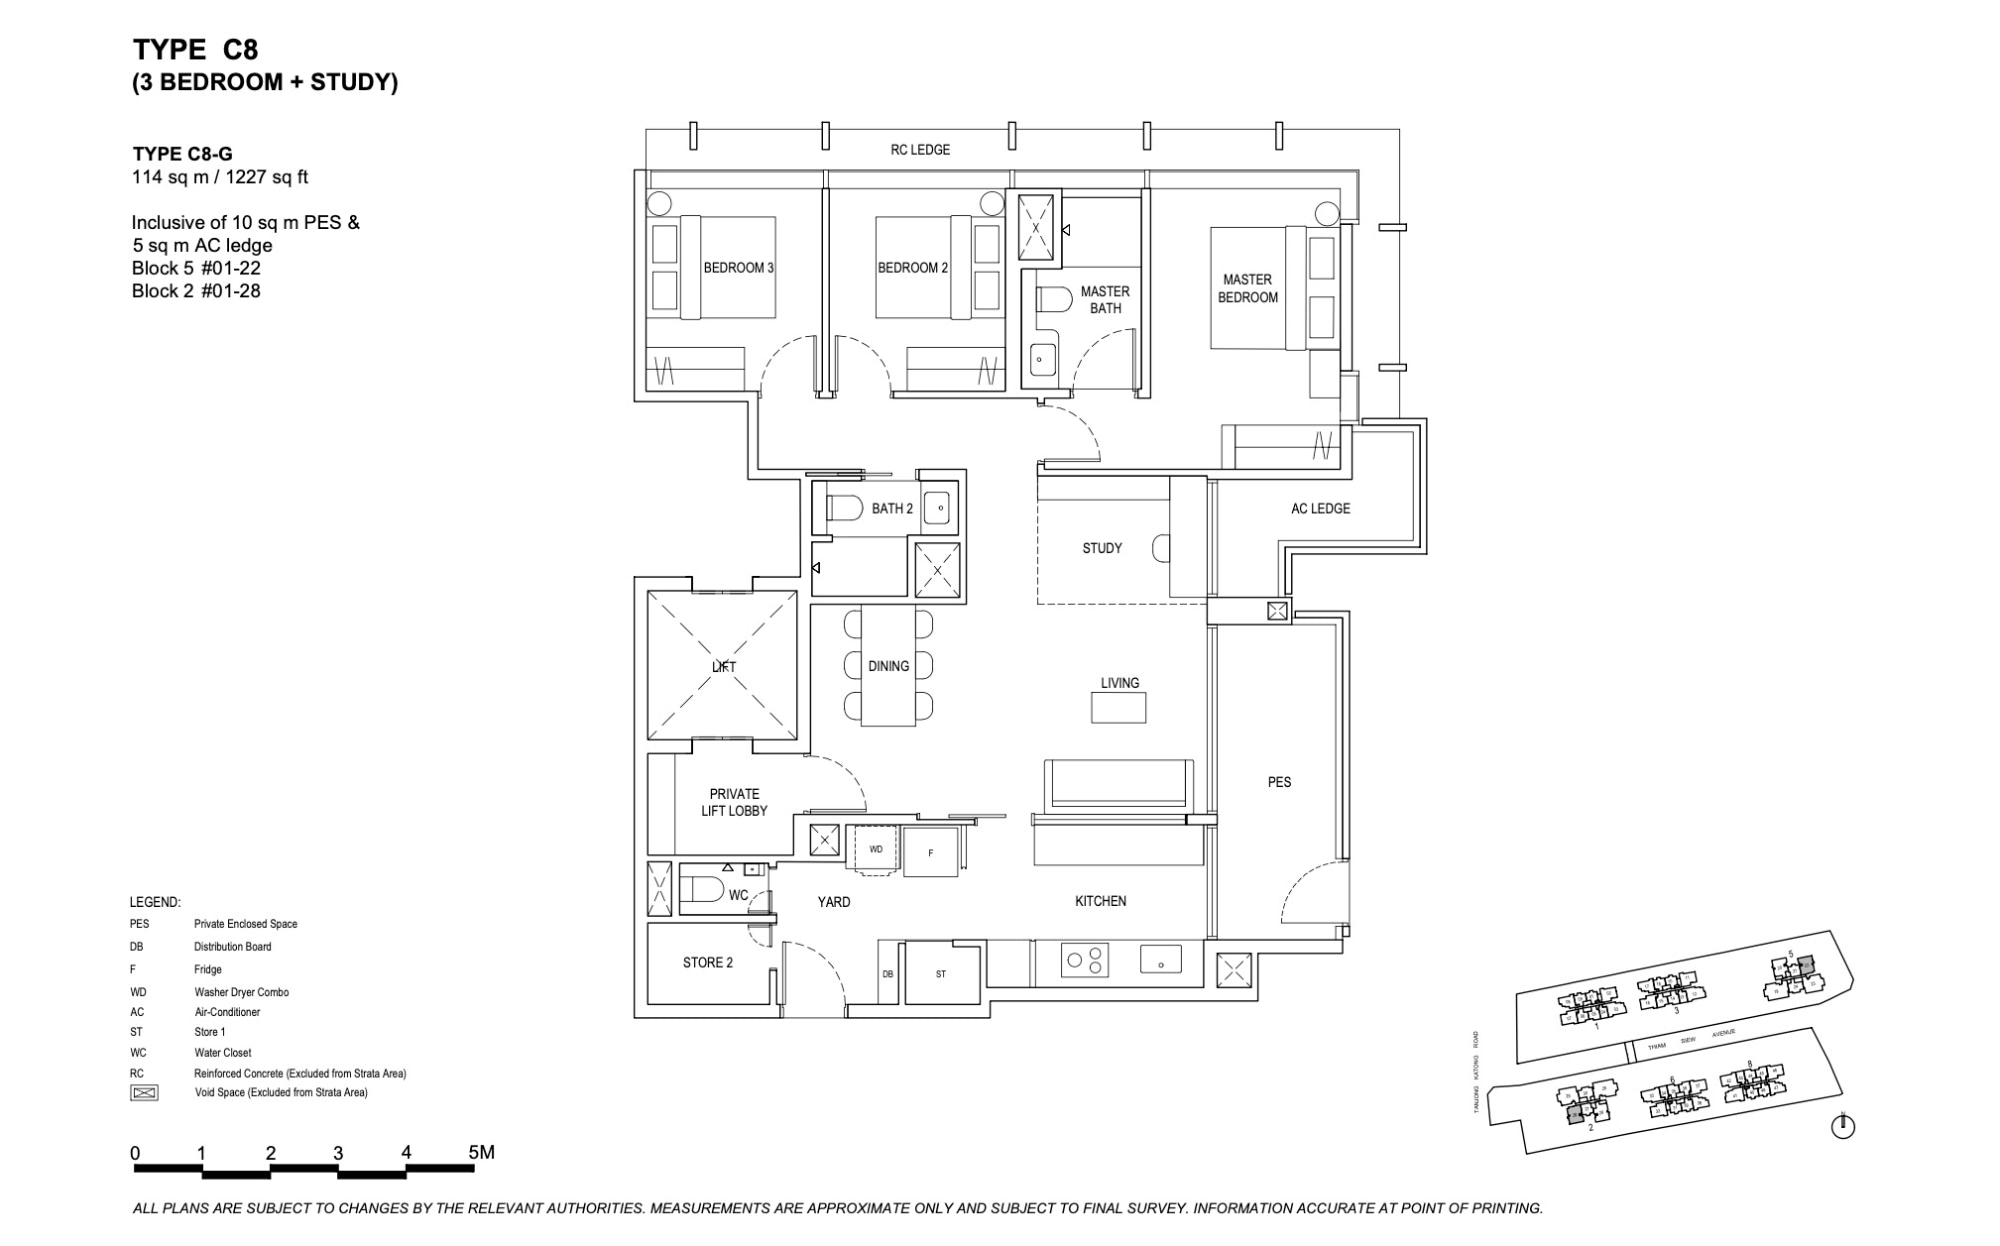 The Continuum Type C8 3 Bedroom + Study Floor Plan